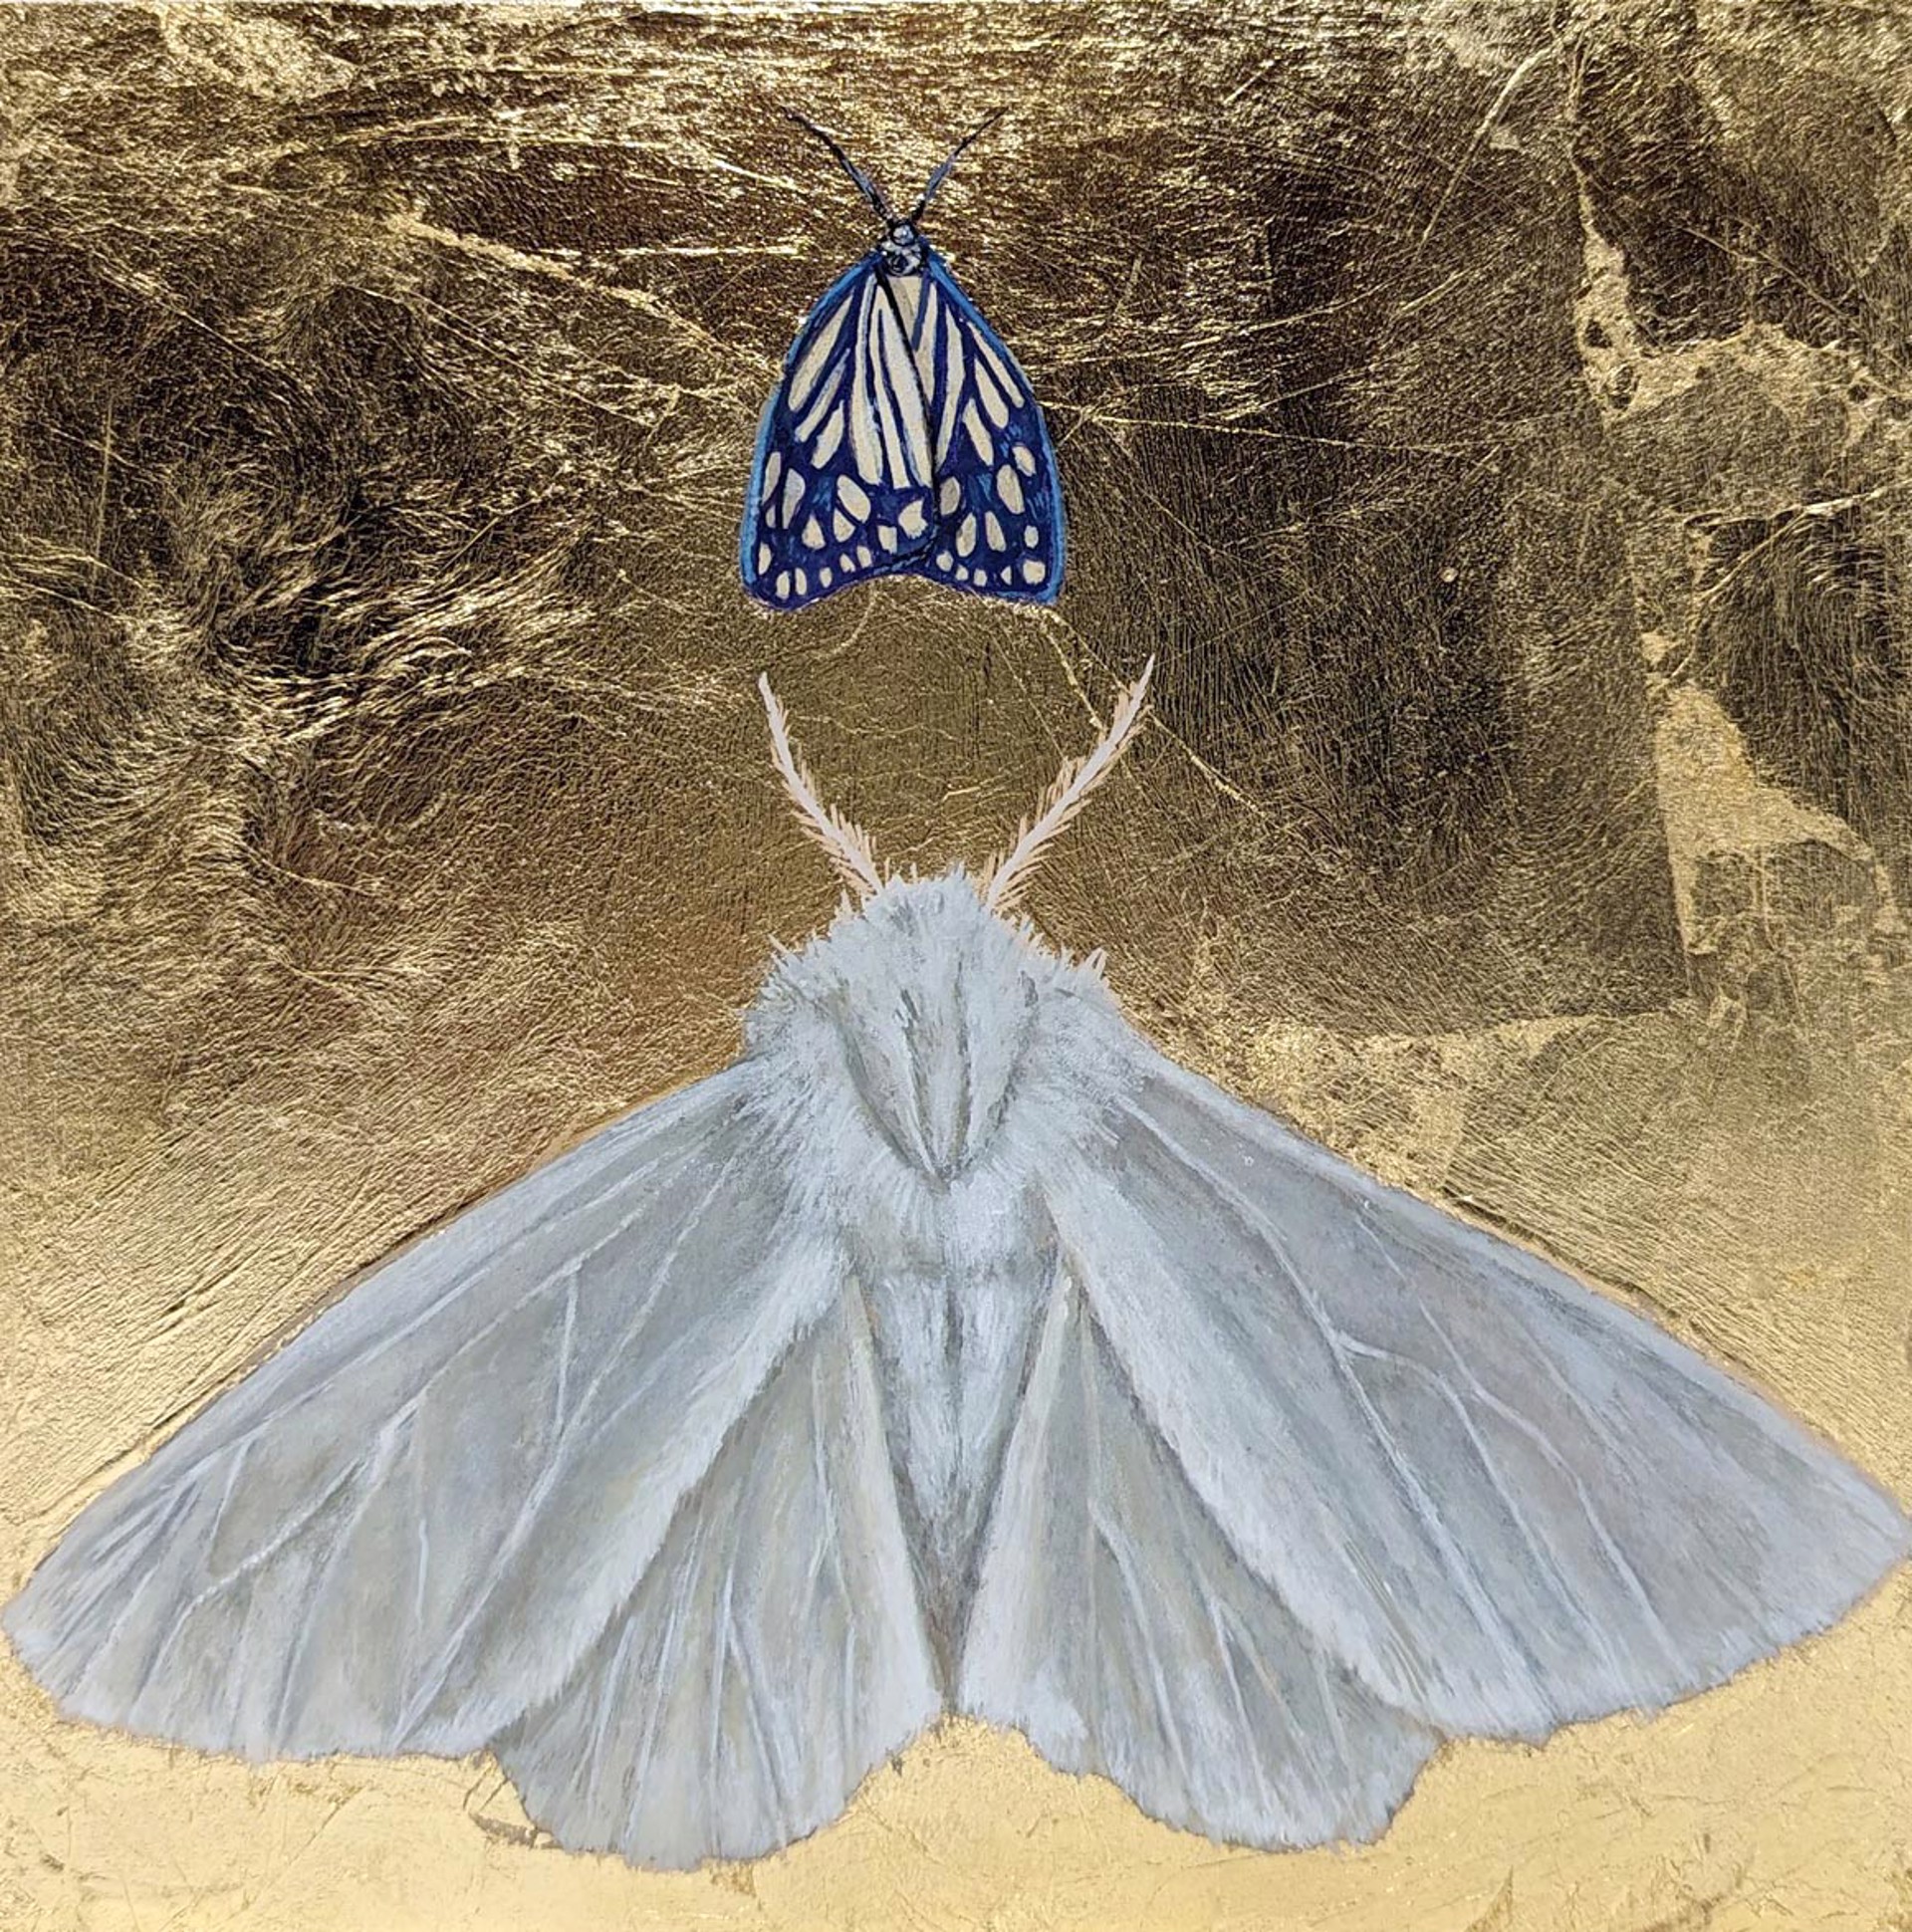 Double Moths by Megan Buccere